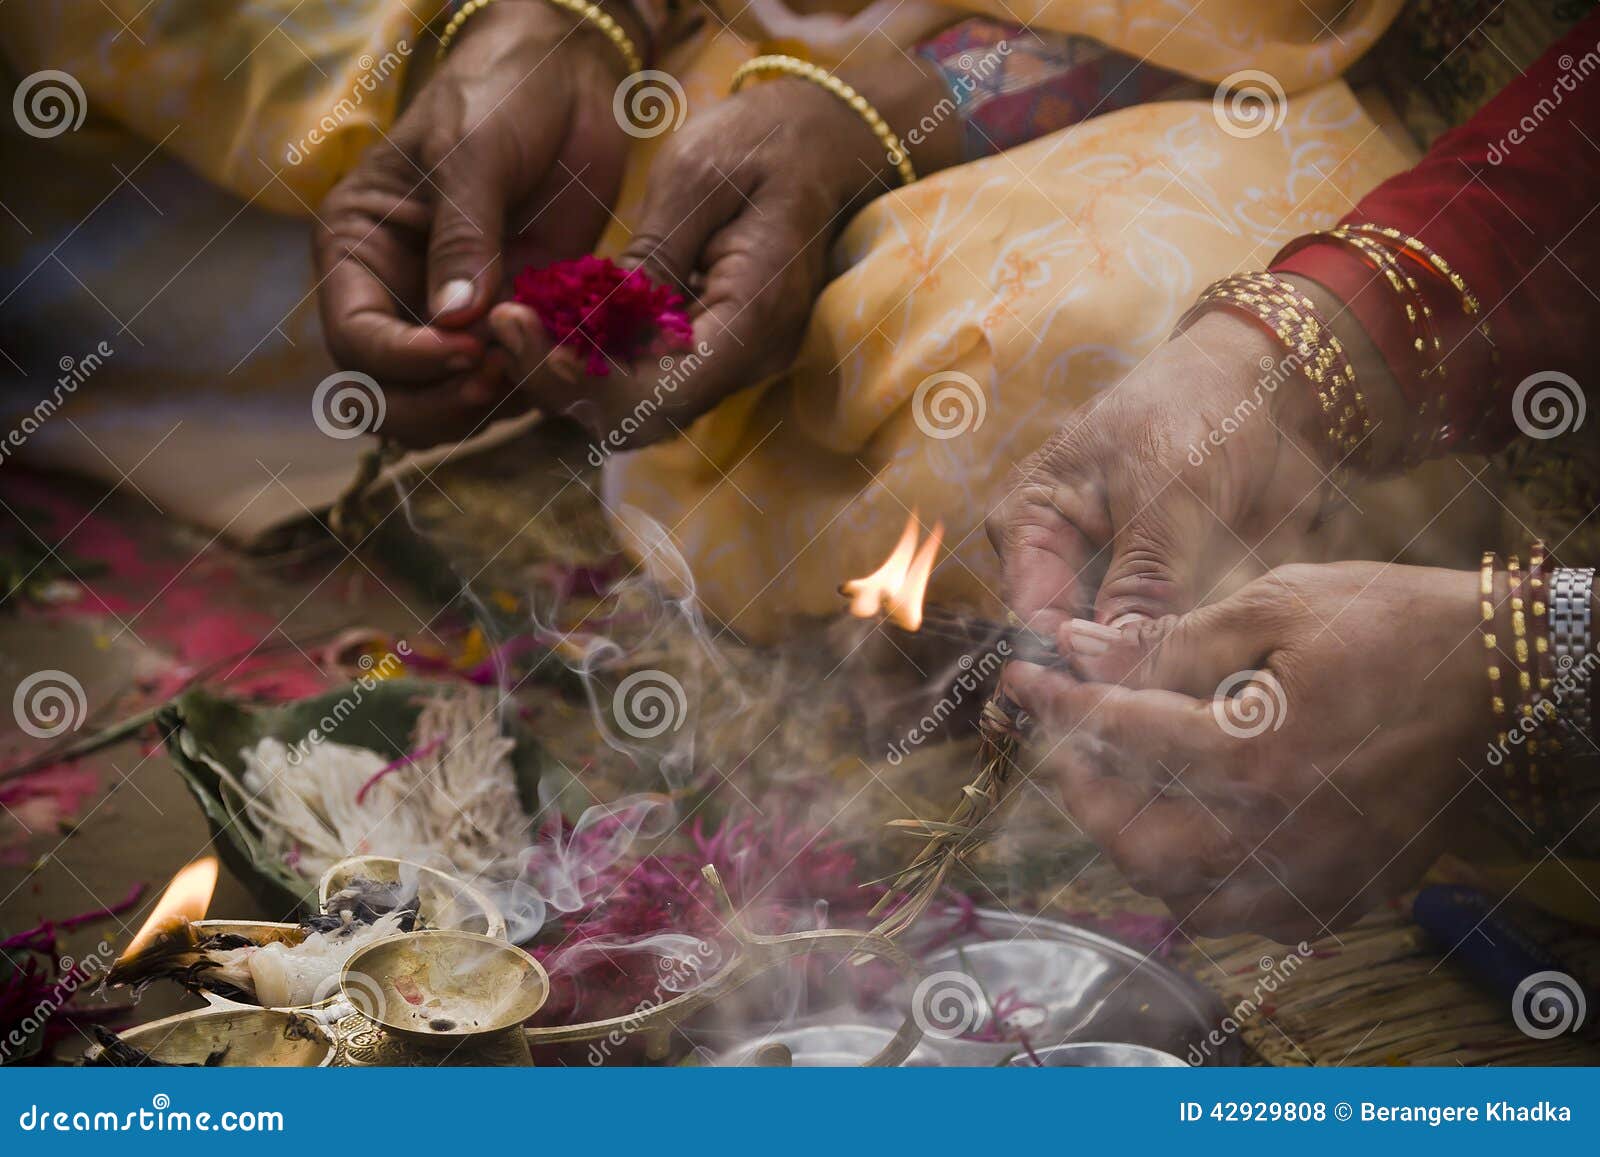 hindu religious ceremony on the occasion of shivaratri, nepal